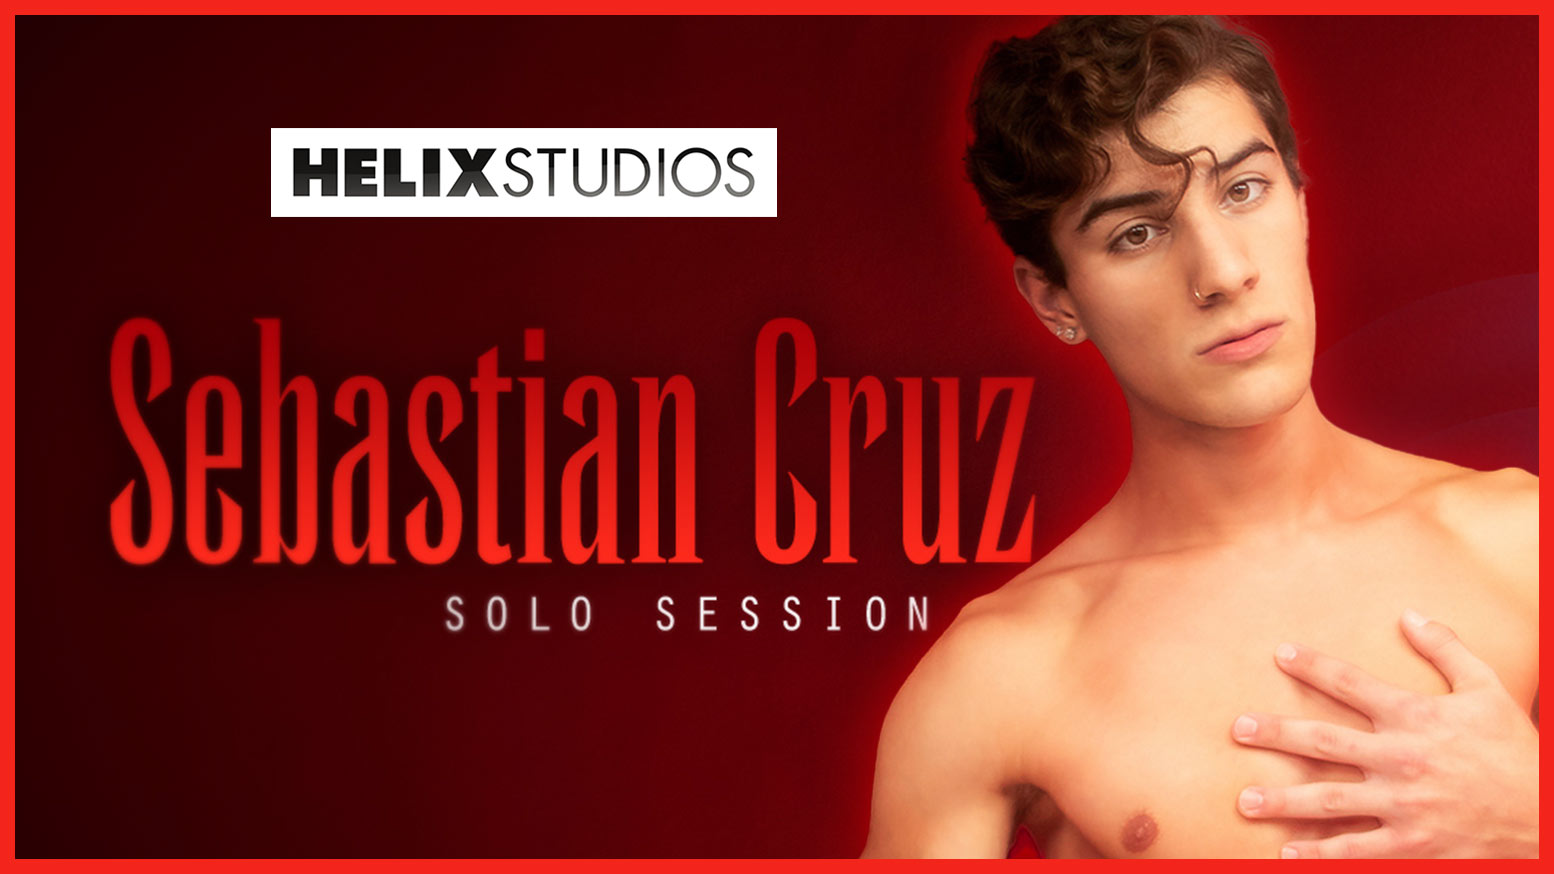 Sebastian Cruz Solo Session